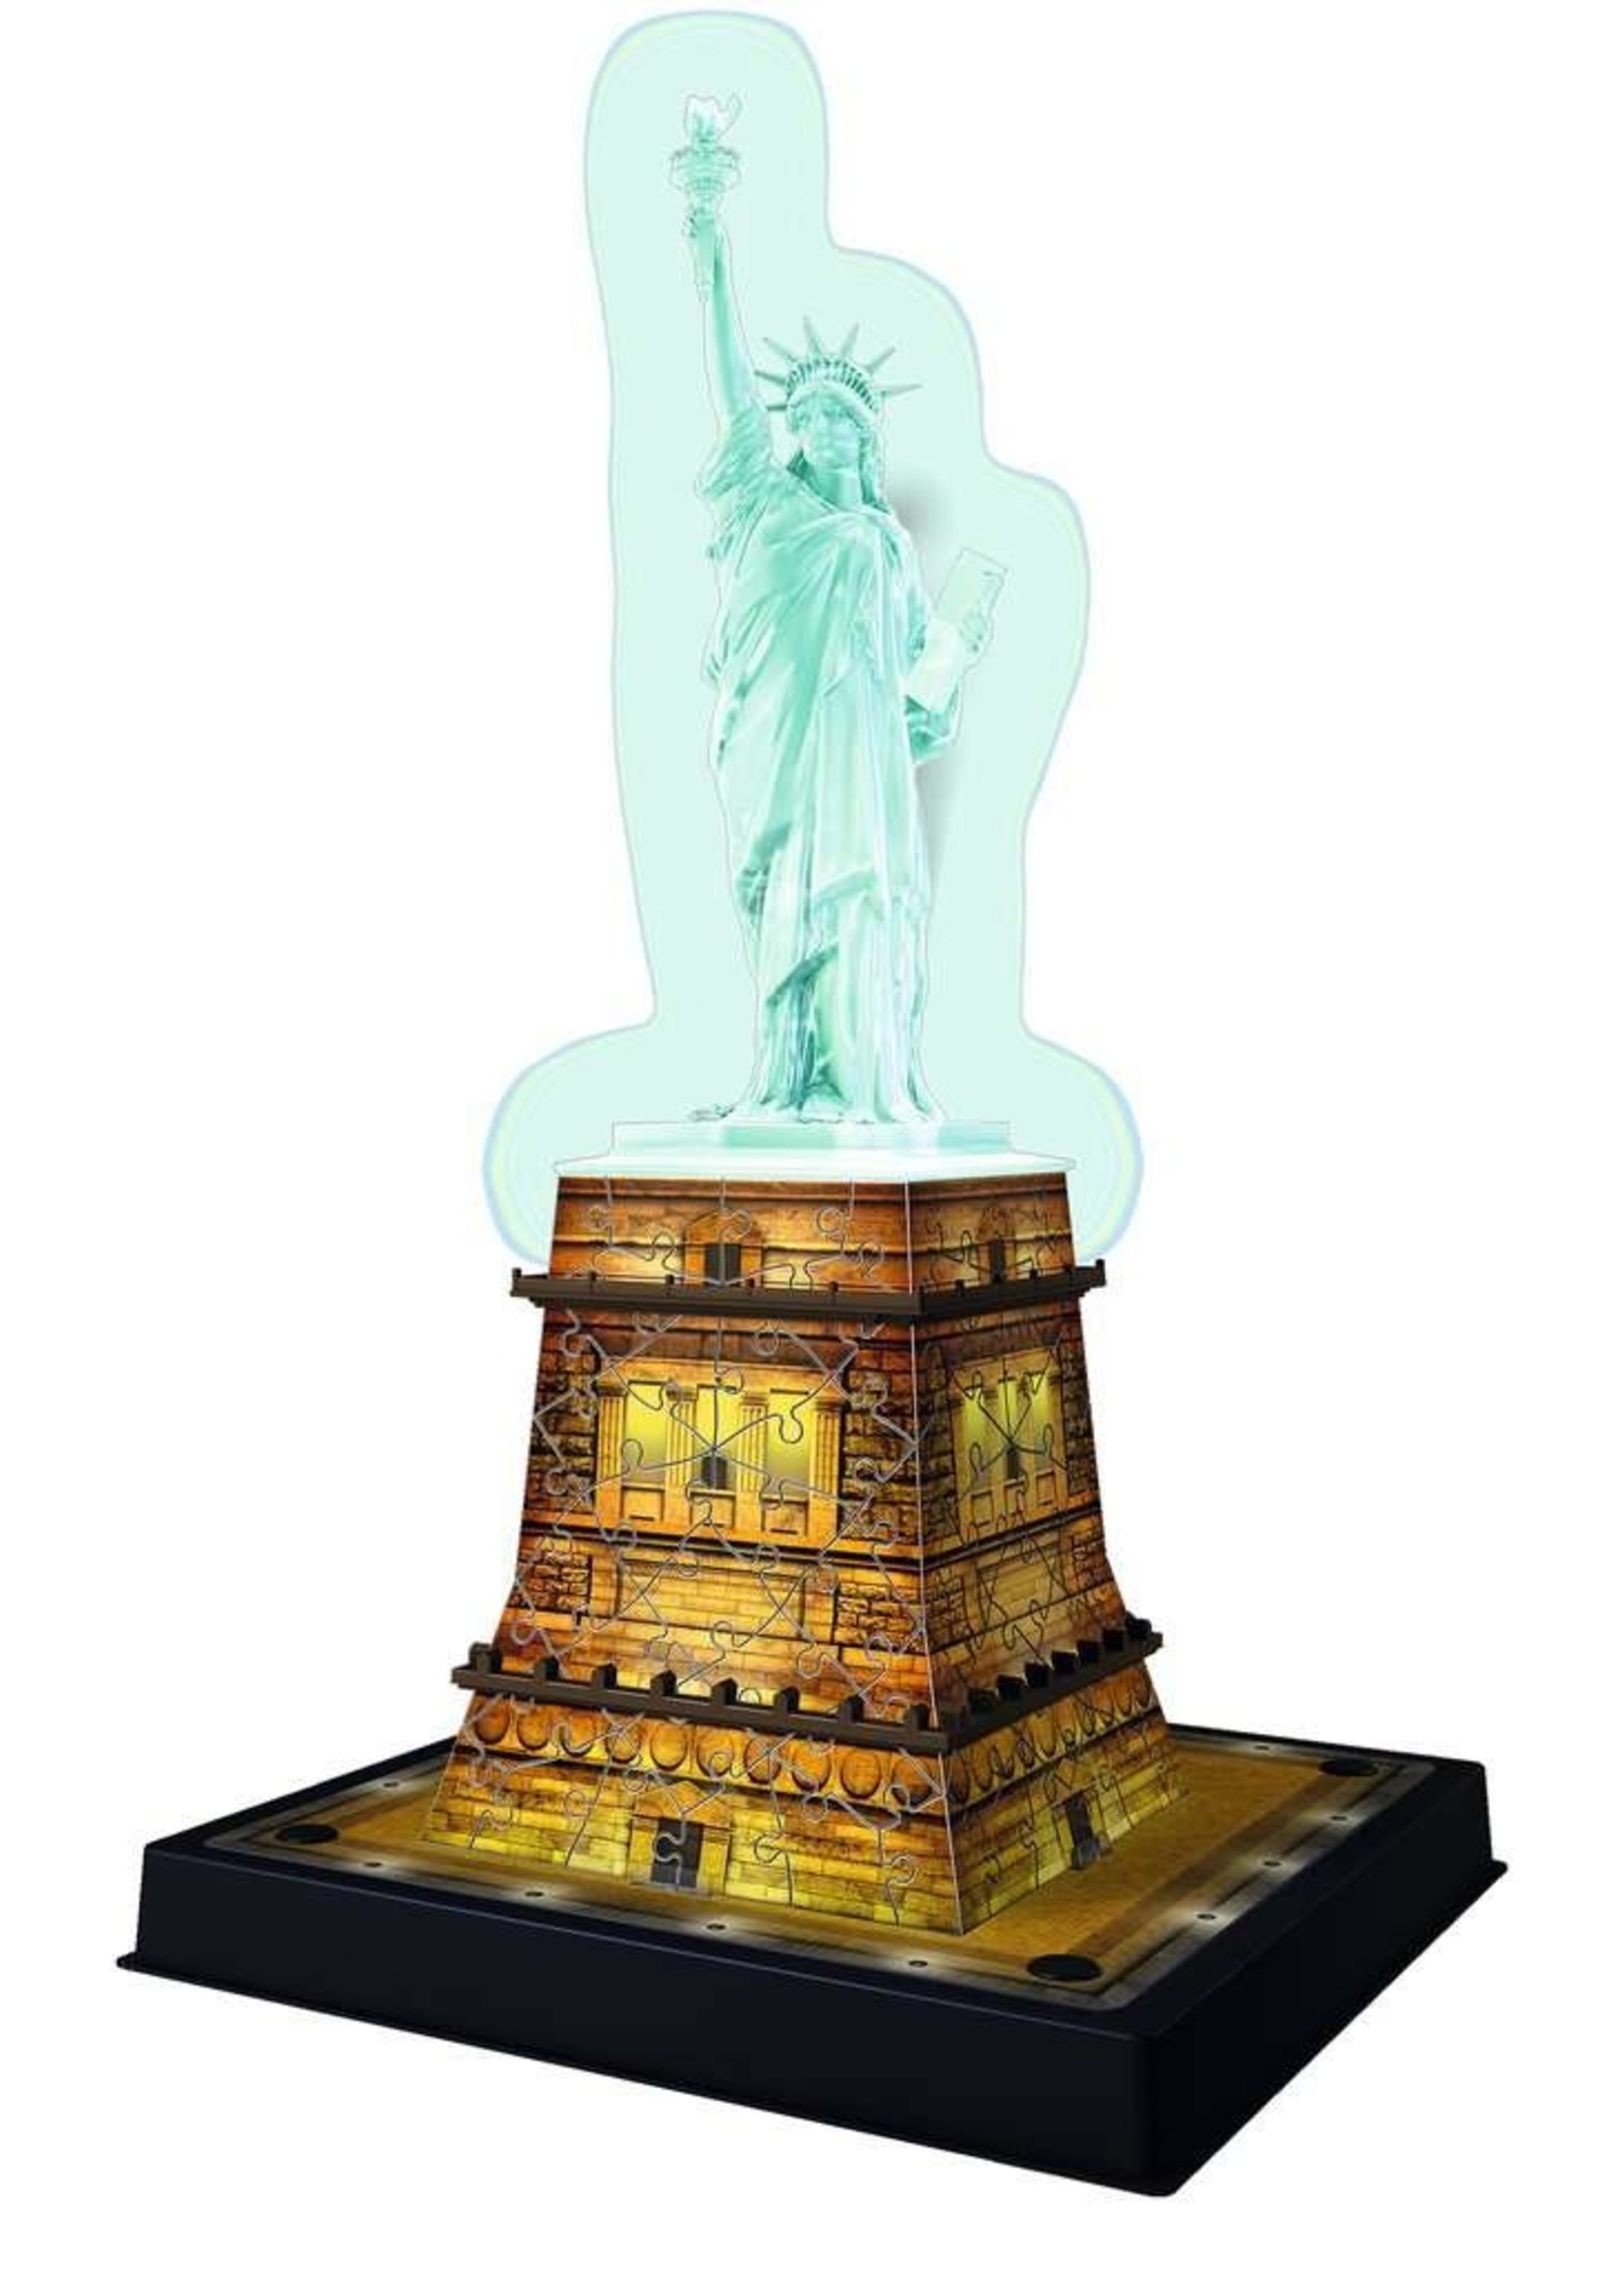 Ravensburger Statue Of Liberty-Night Ed 3D